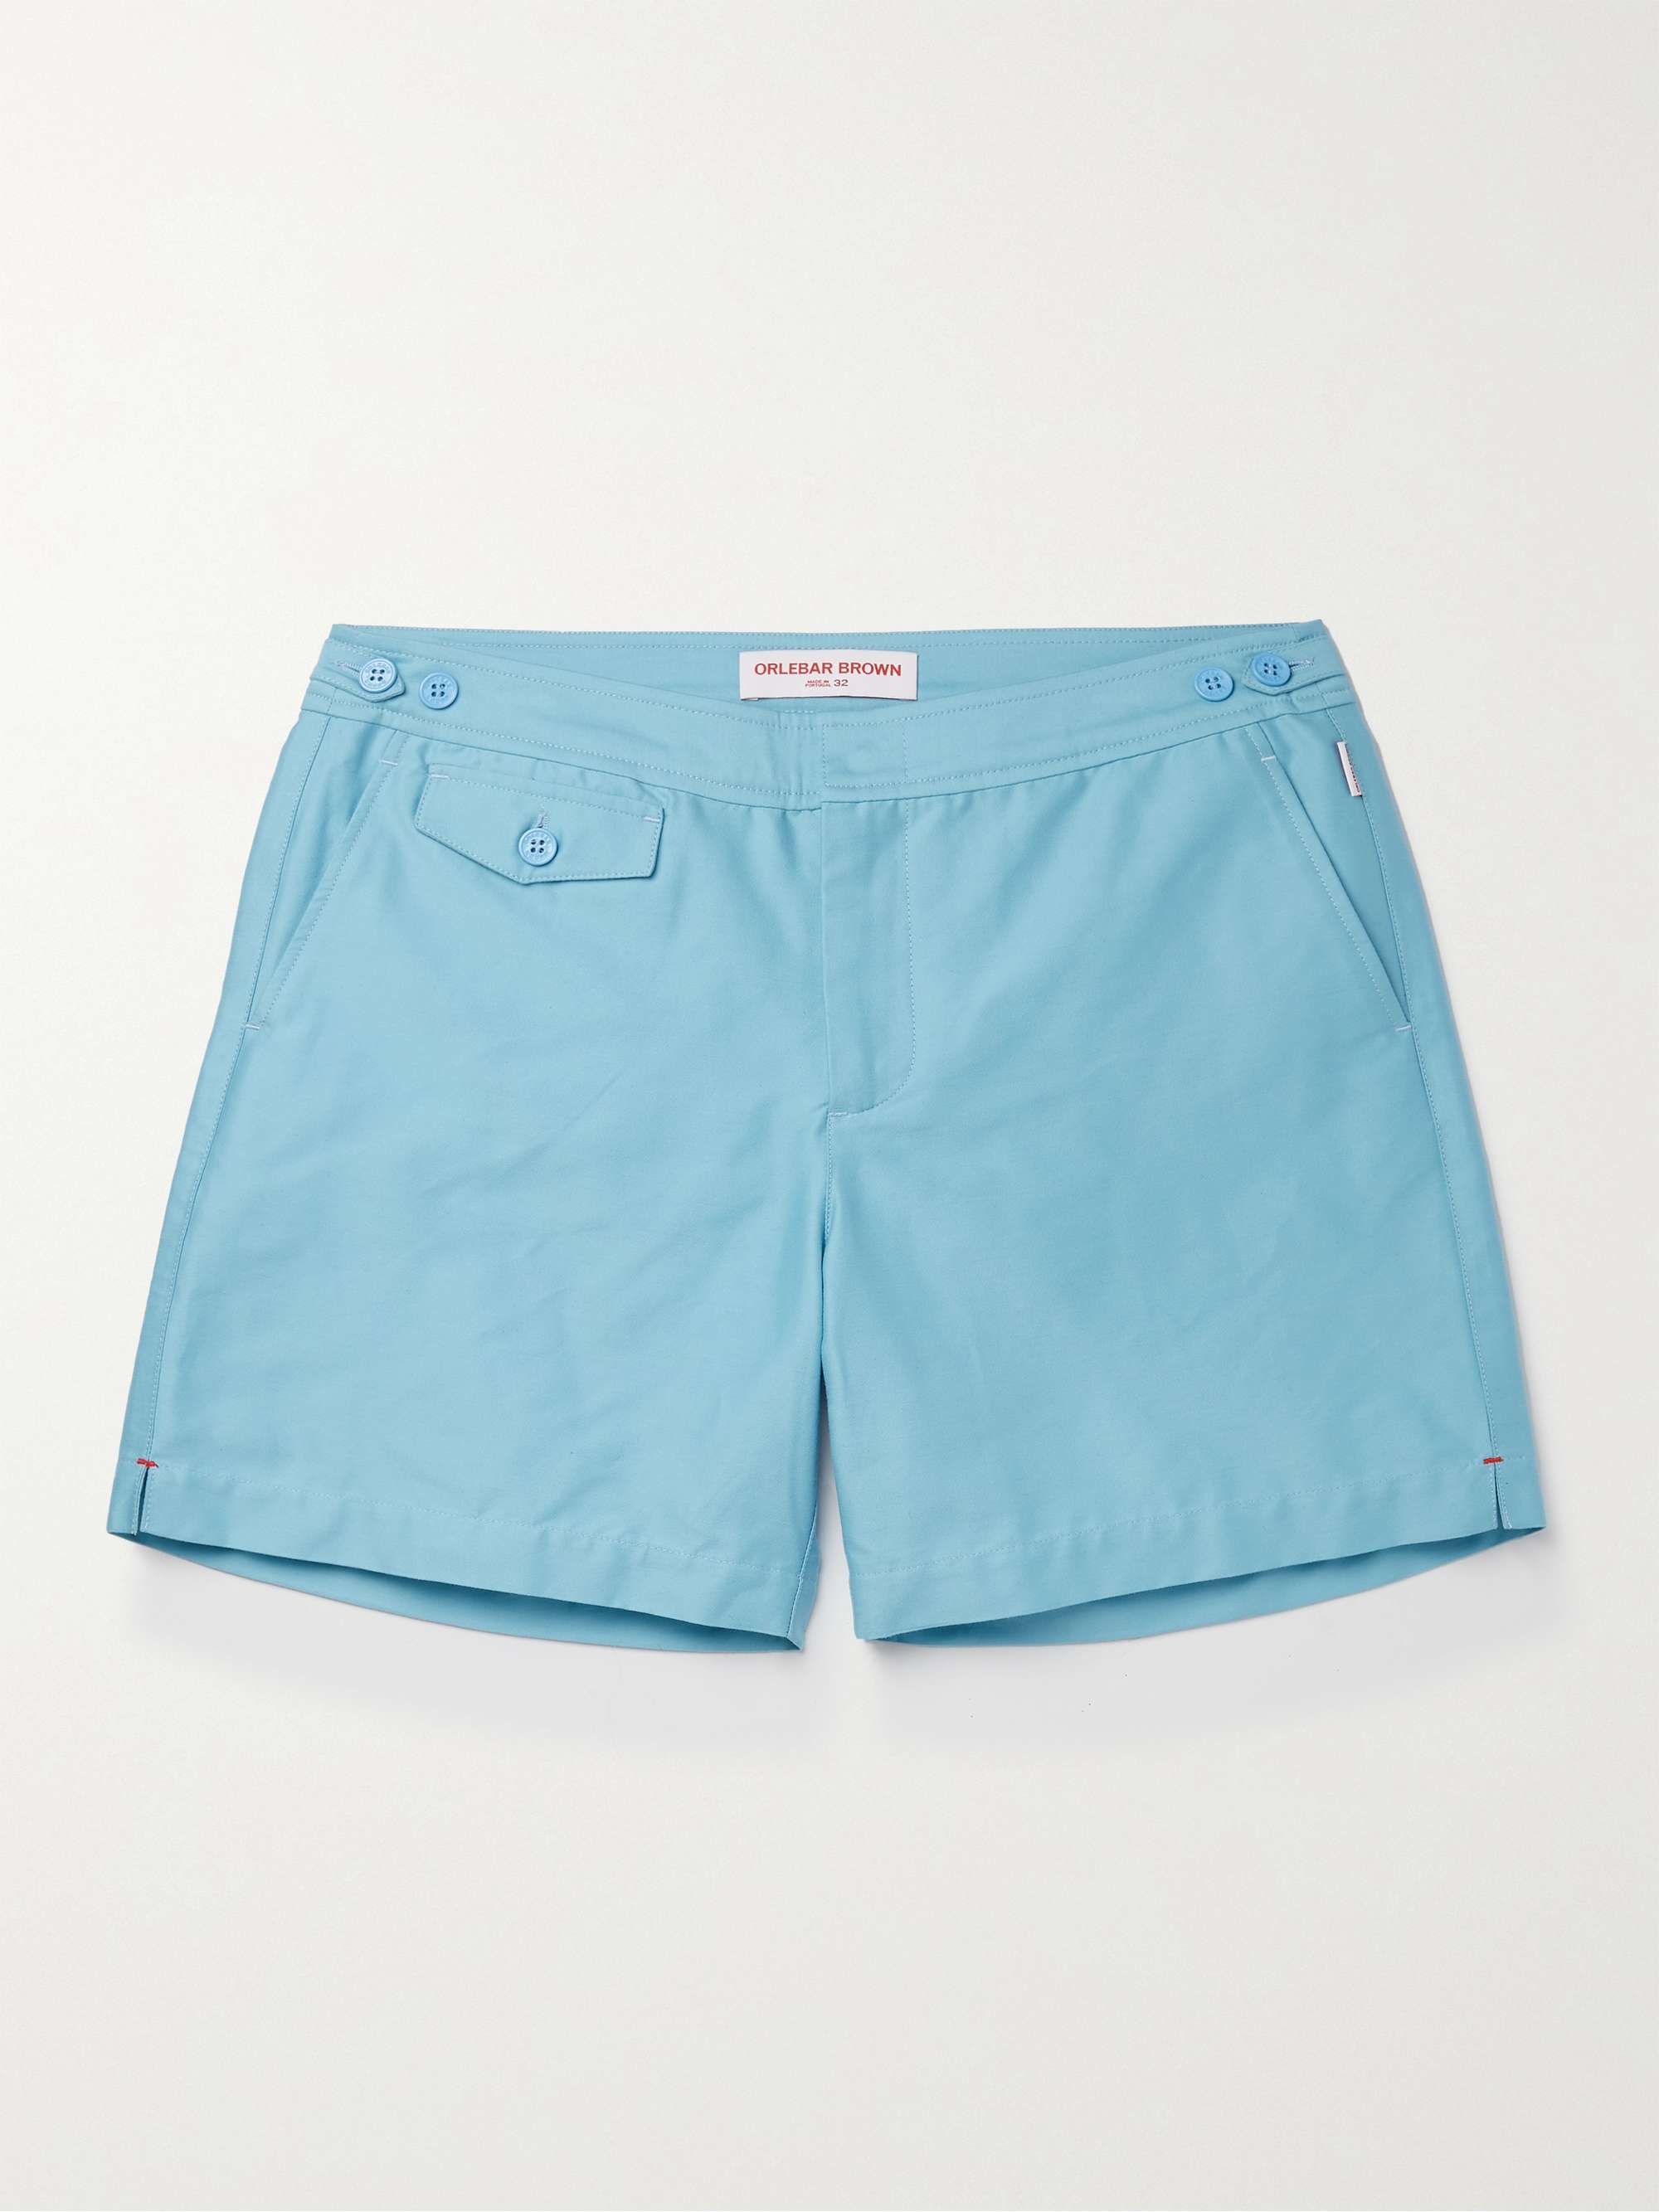 Orlebar Brown Synthetic Bulldog Blue Haze Mid-length Swim Shorts for Men Mens Clothing Beachwear Boardshorts and swim shorts 